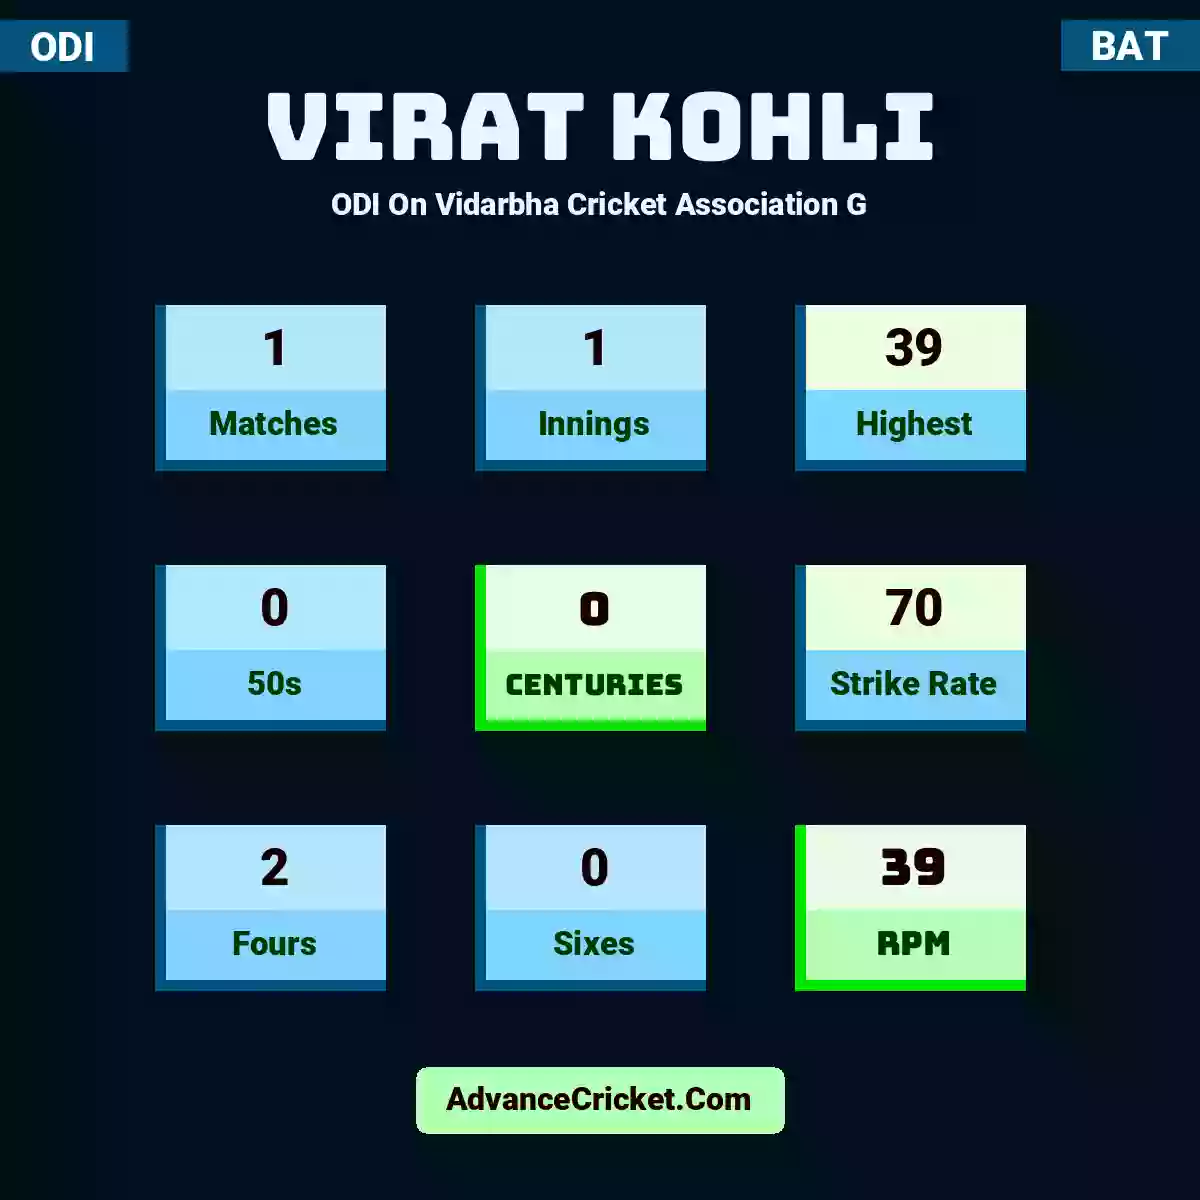 Virat Kohli ODI  On Vidarbha Cricket Association G, Virat Kohli played 1 matches, scored 39 runs as highest, 0 half-centuries, and 0 centuries, with a strike rate of 70. V.Kohli hit 2 fours and 0 sixes, with an RPM of 39.